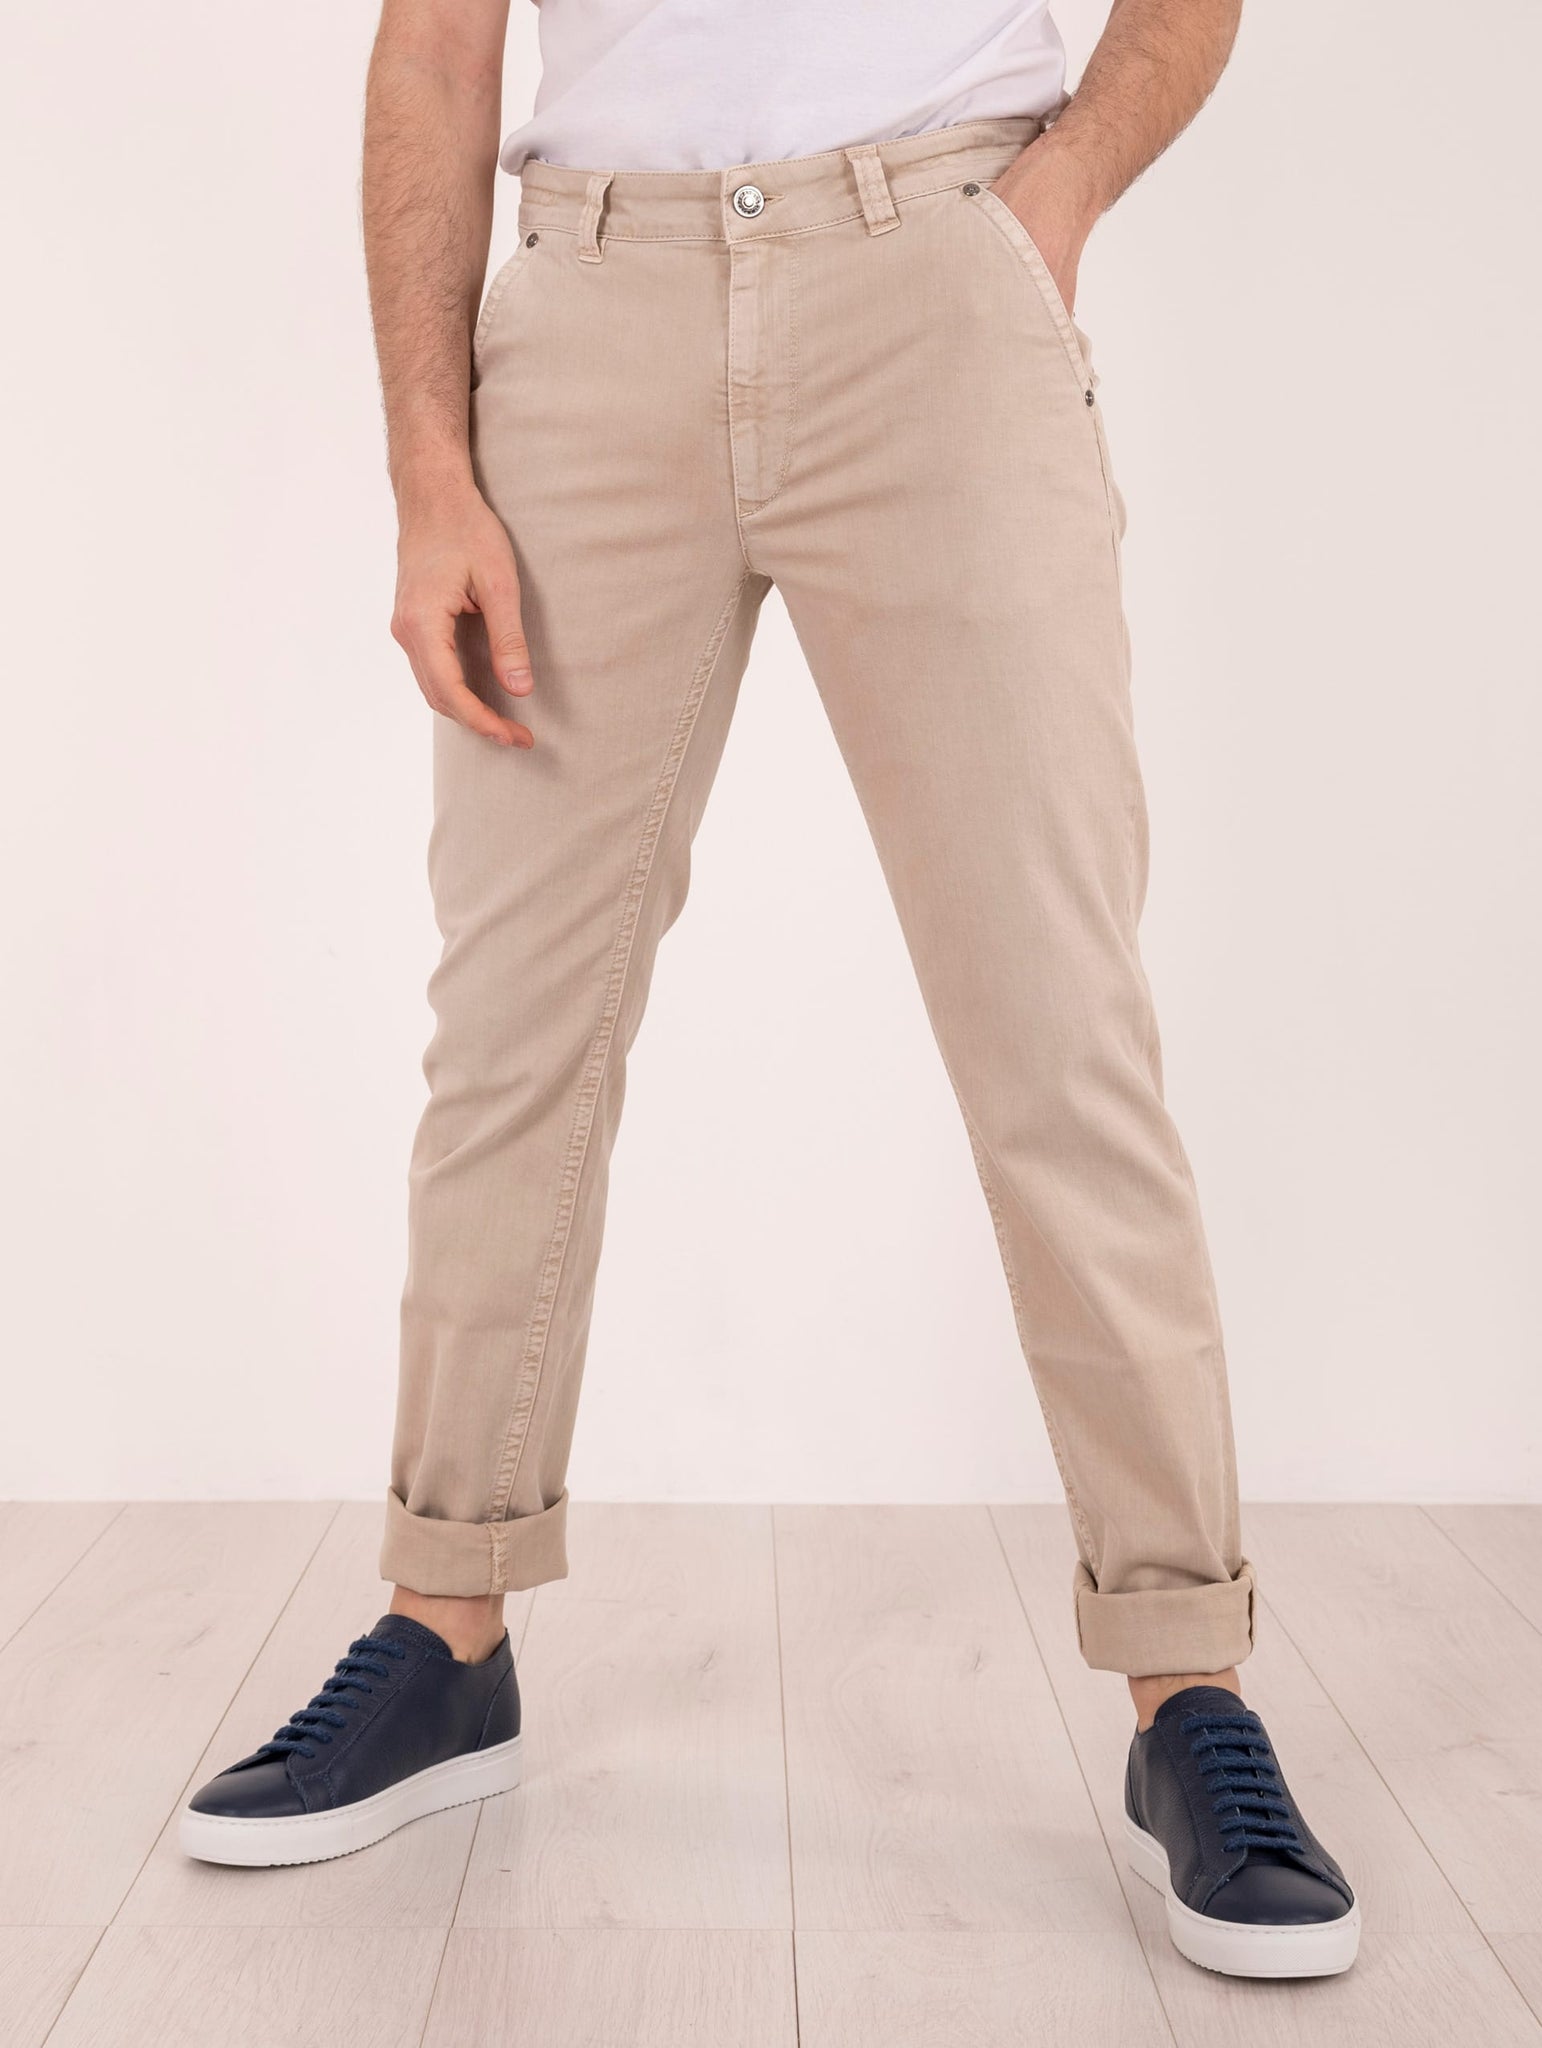 Pantalone Barmas in Cotone Stretch Cachi